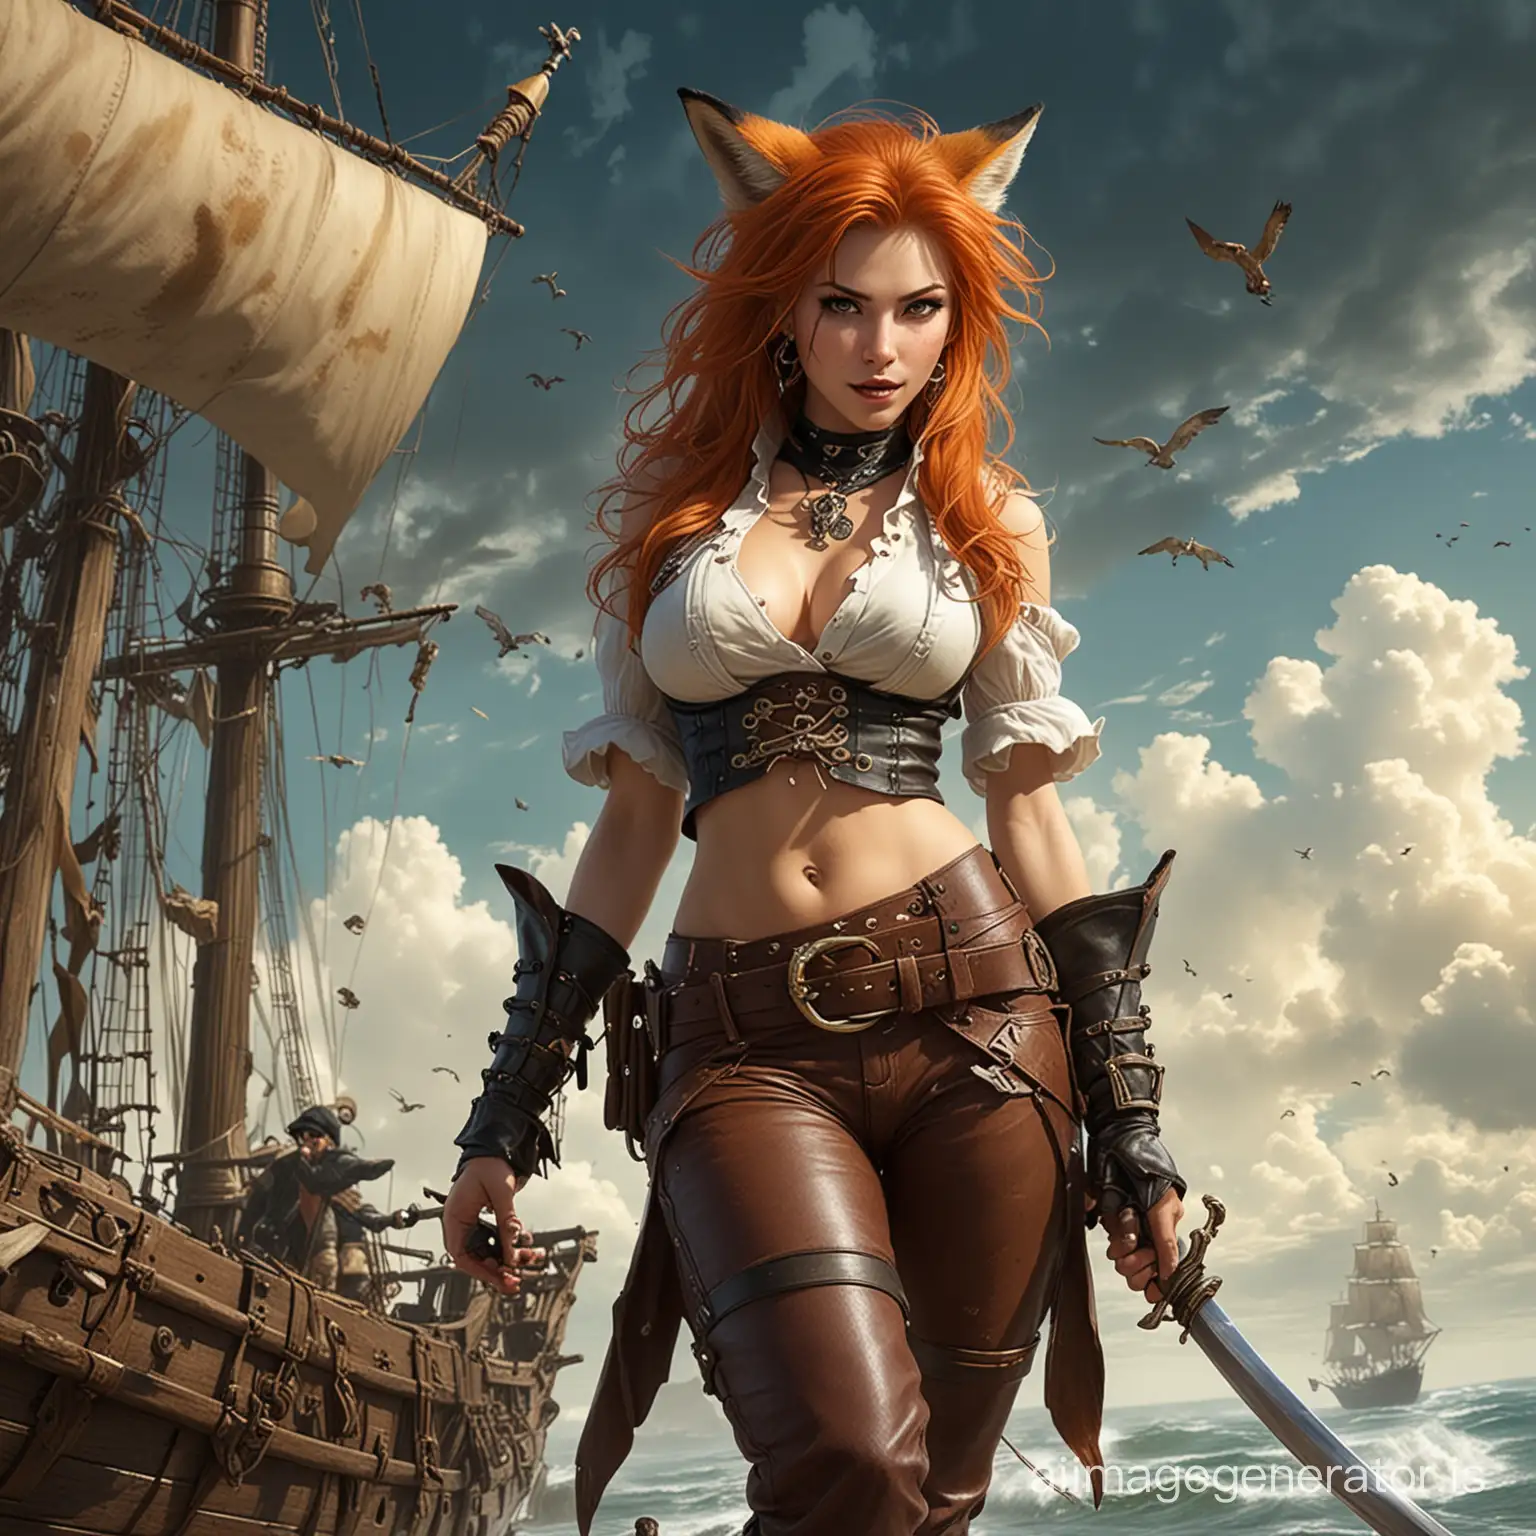 Bright-Fox-Pirate-Girl-Laughing-on-Marine-Scenery